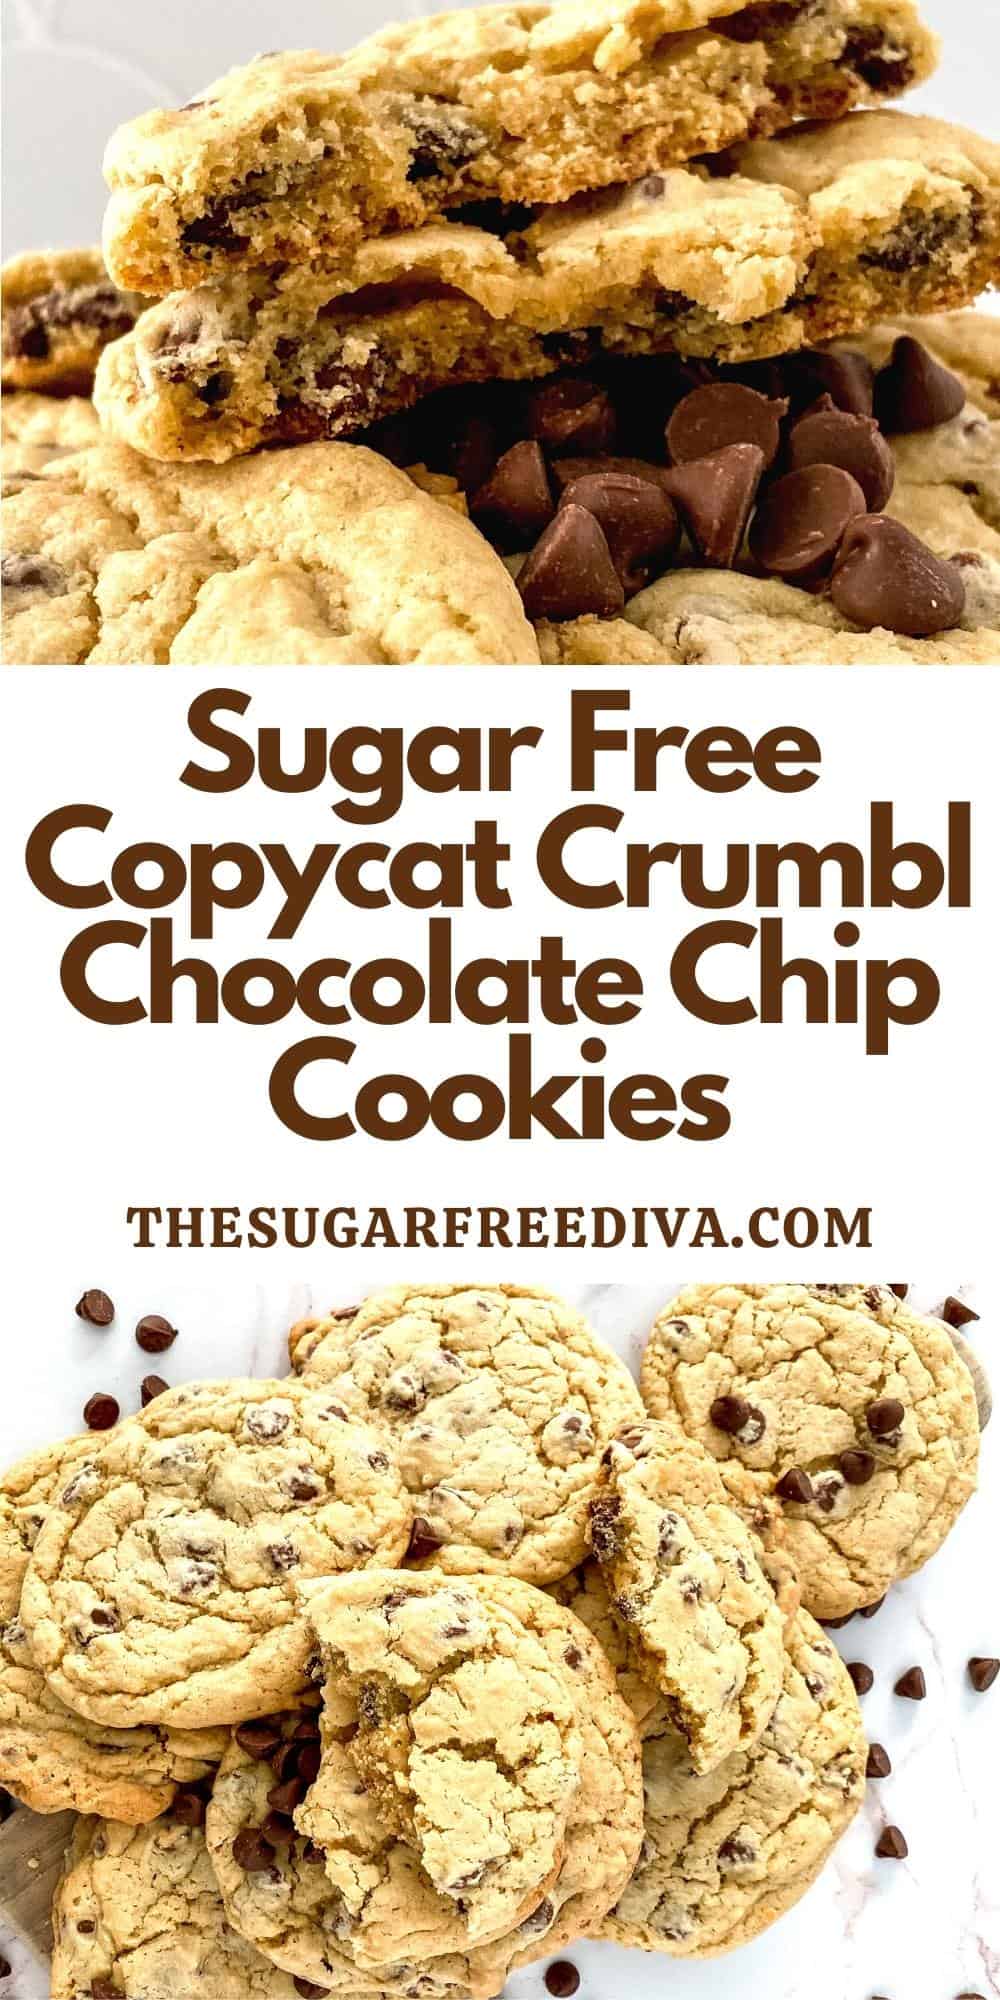 Sugar Free Copycat Crumbl Chocolate Chip Cookies